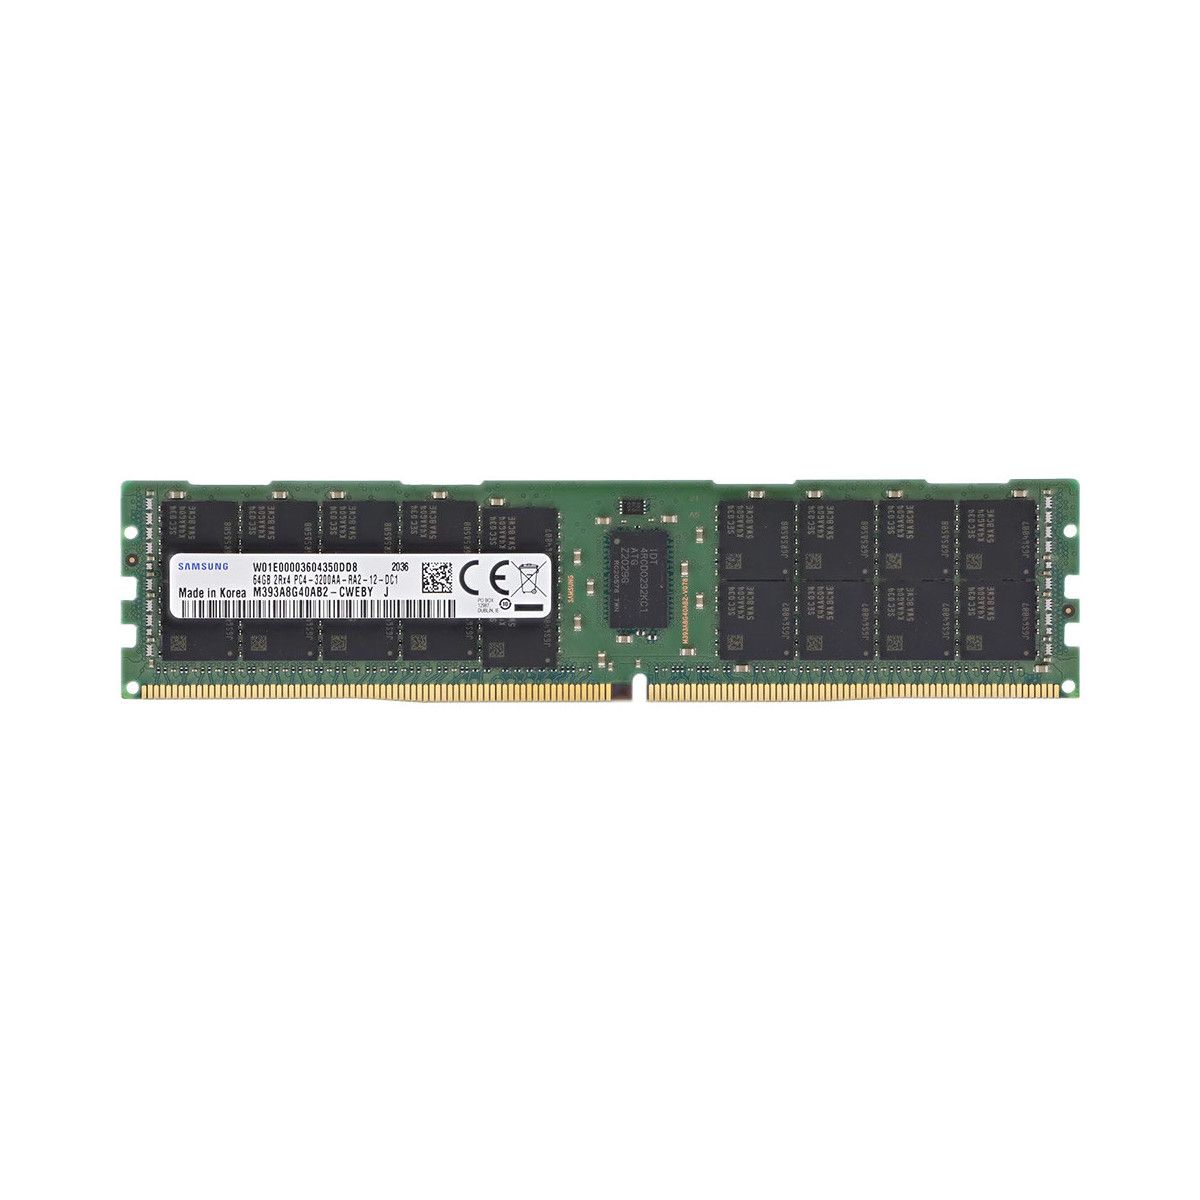 MEM-DR464L-CL03-ER32-MS- Memstar 1x 64GB DDR4-3200 RDIMM PC4-25600R - Mem-Star compatibel OEM geheugen 1 - Memstar 